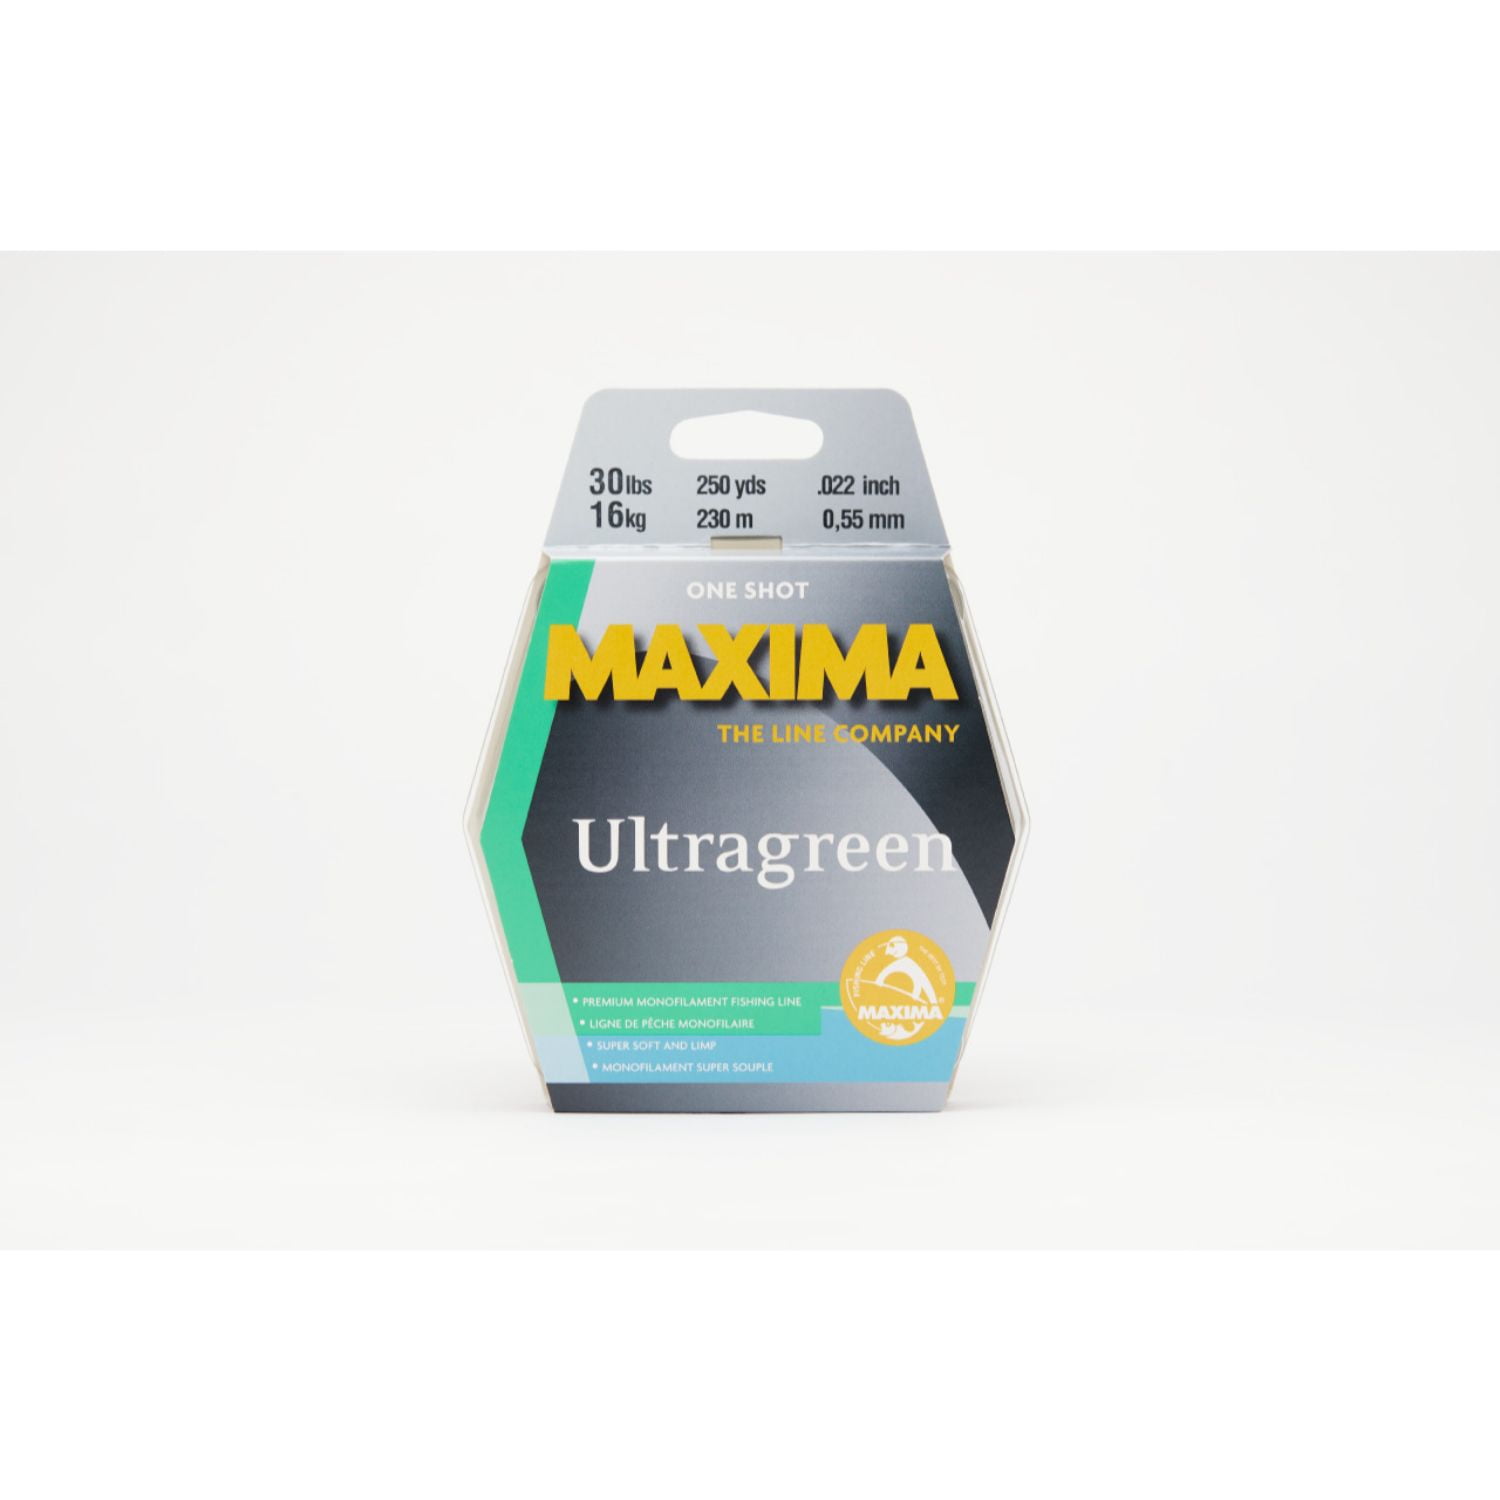 Maxima Ultragreen One Shot Spool - 250yds 20lb